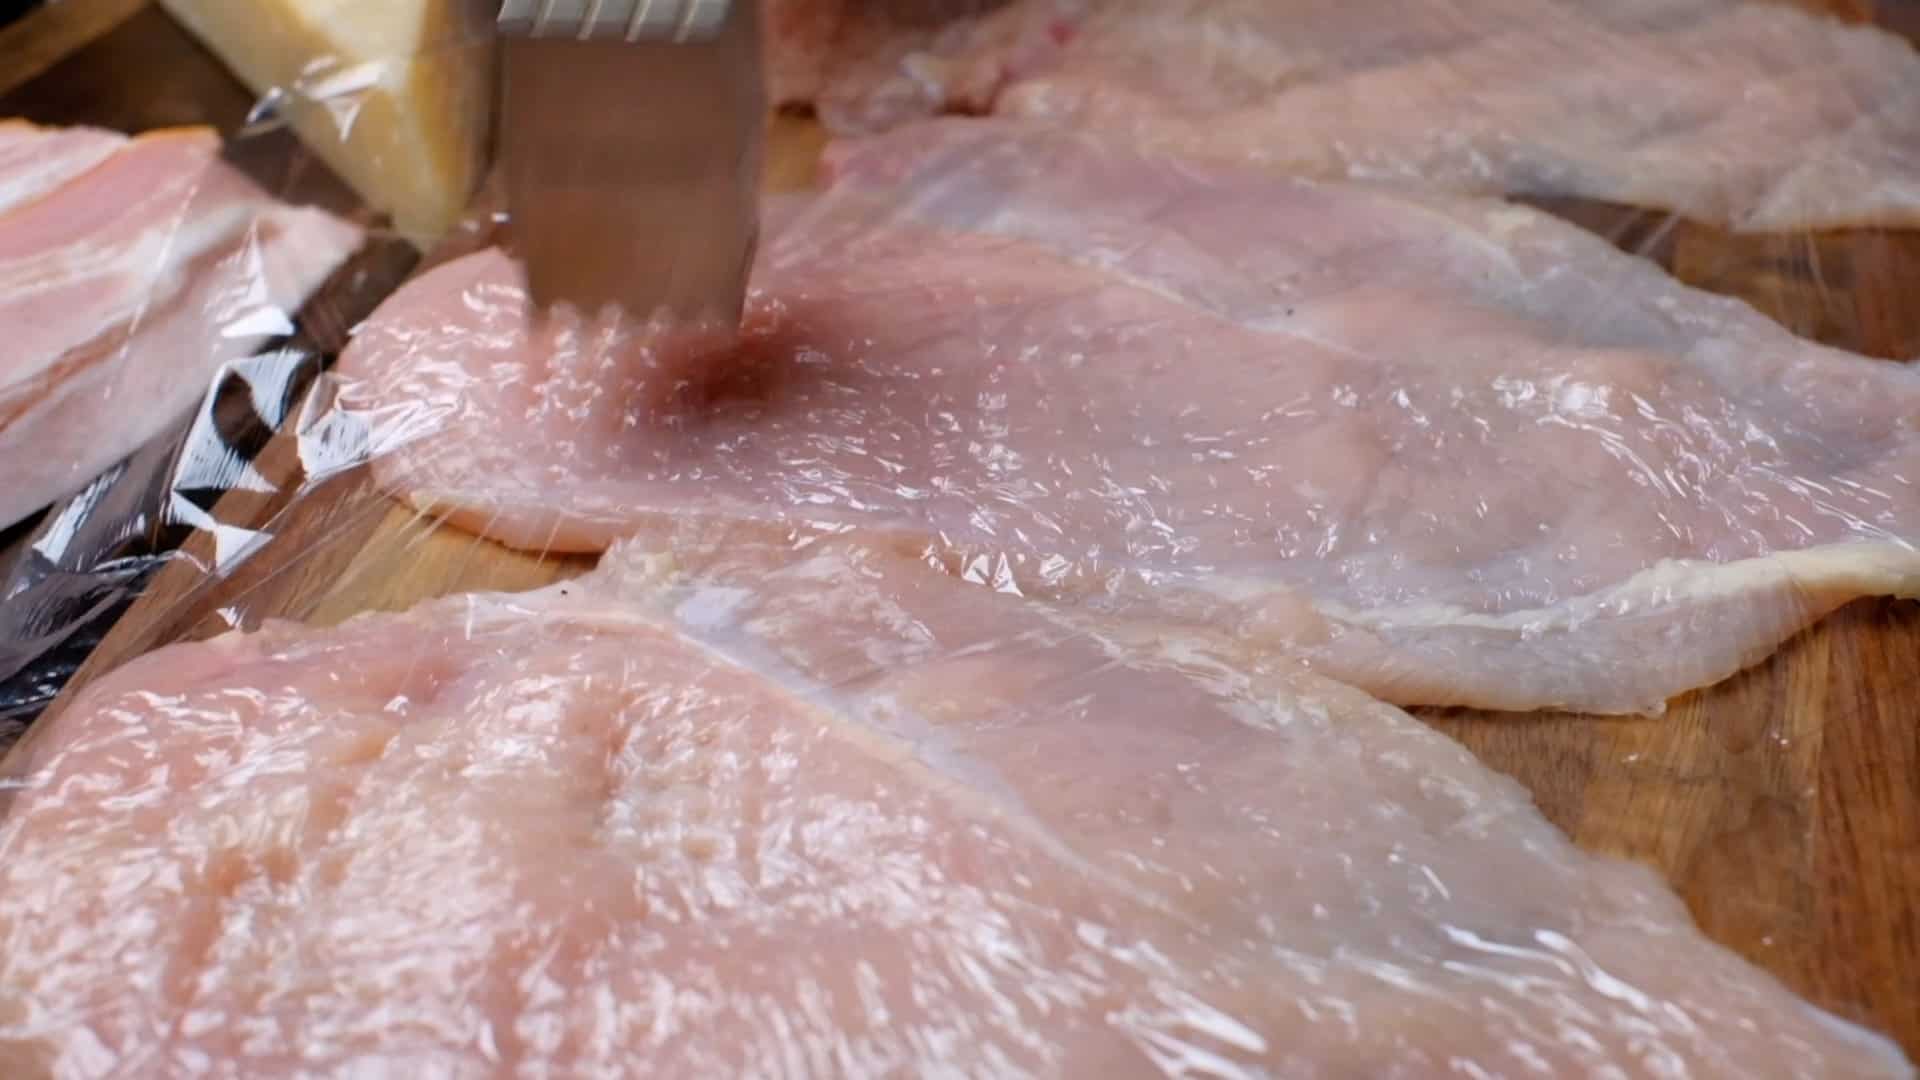 Flattening the chicken breasts.